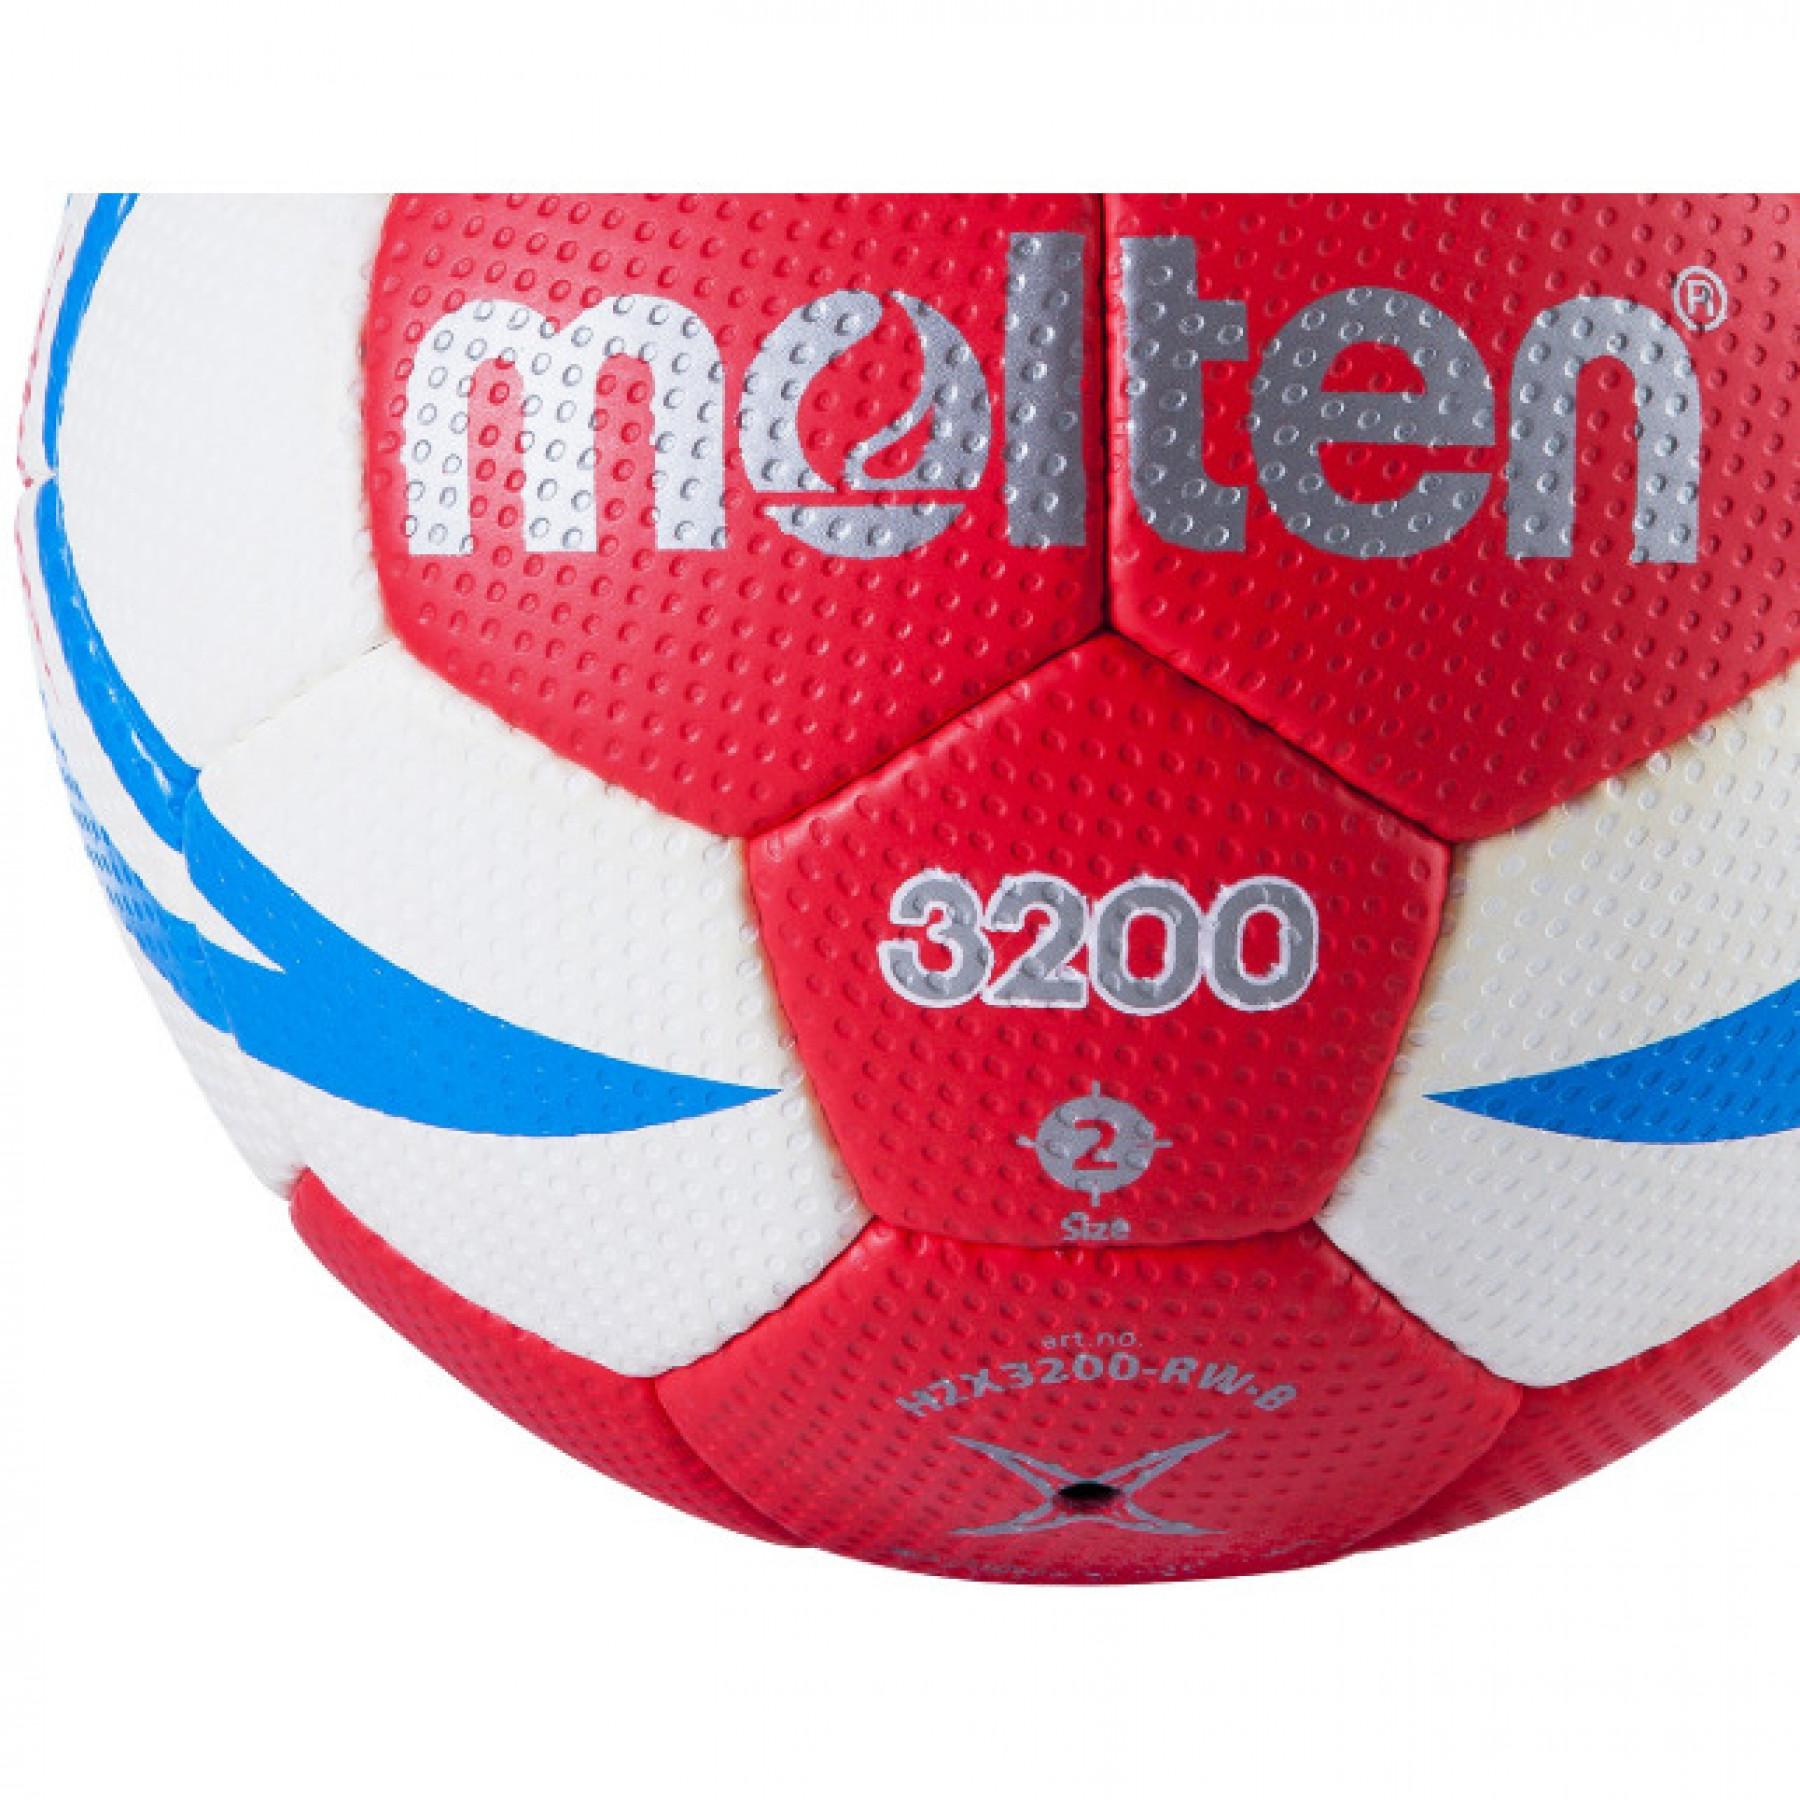 Bola de treino Molten HX3200 FFHB taille 2